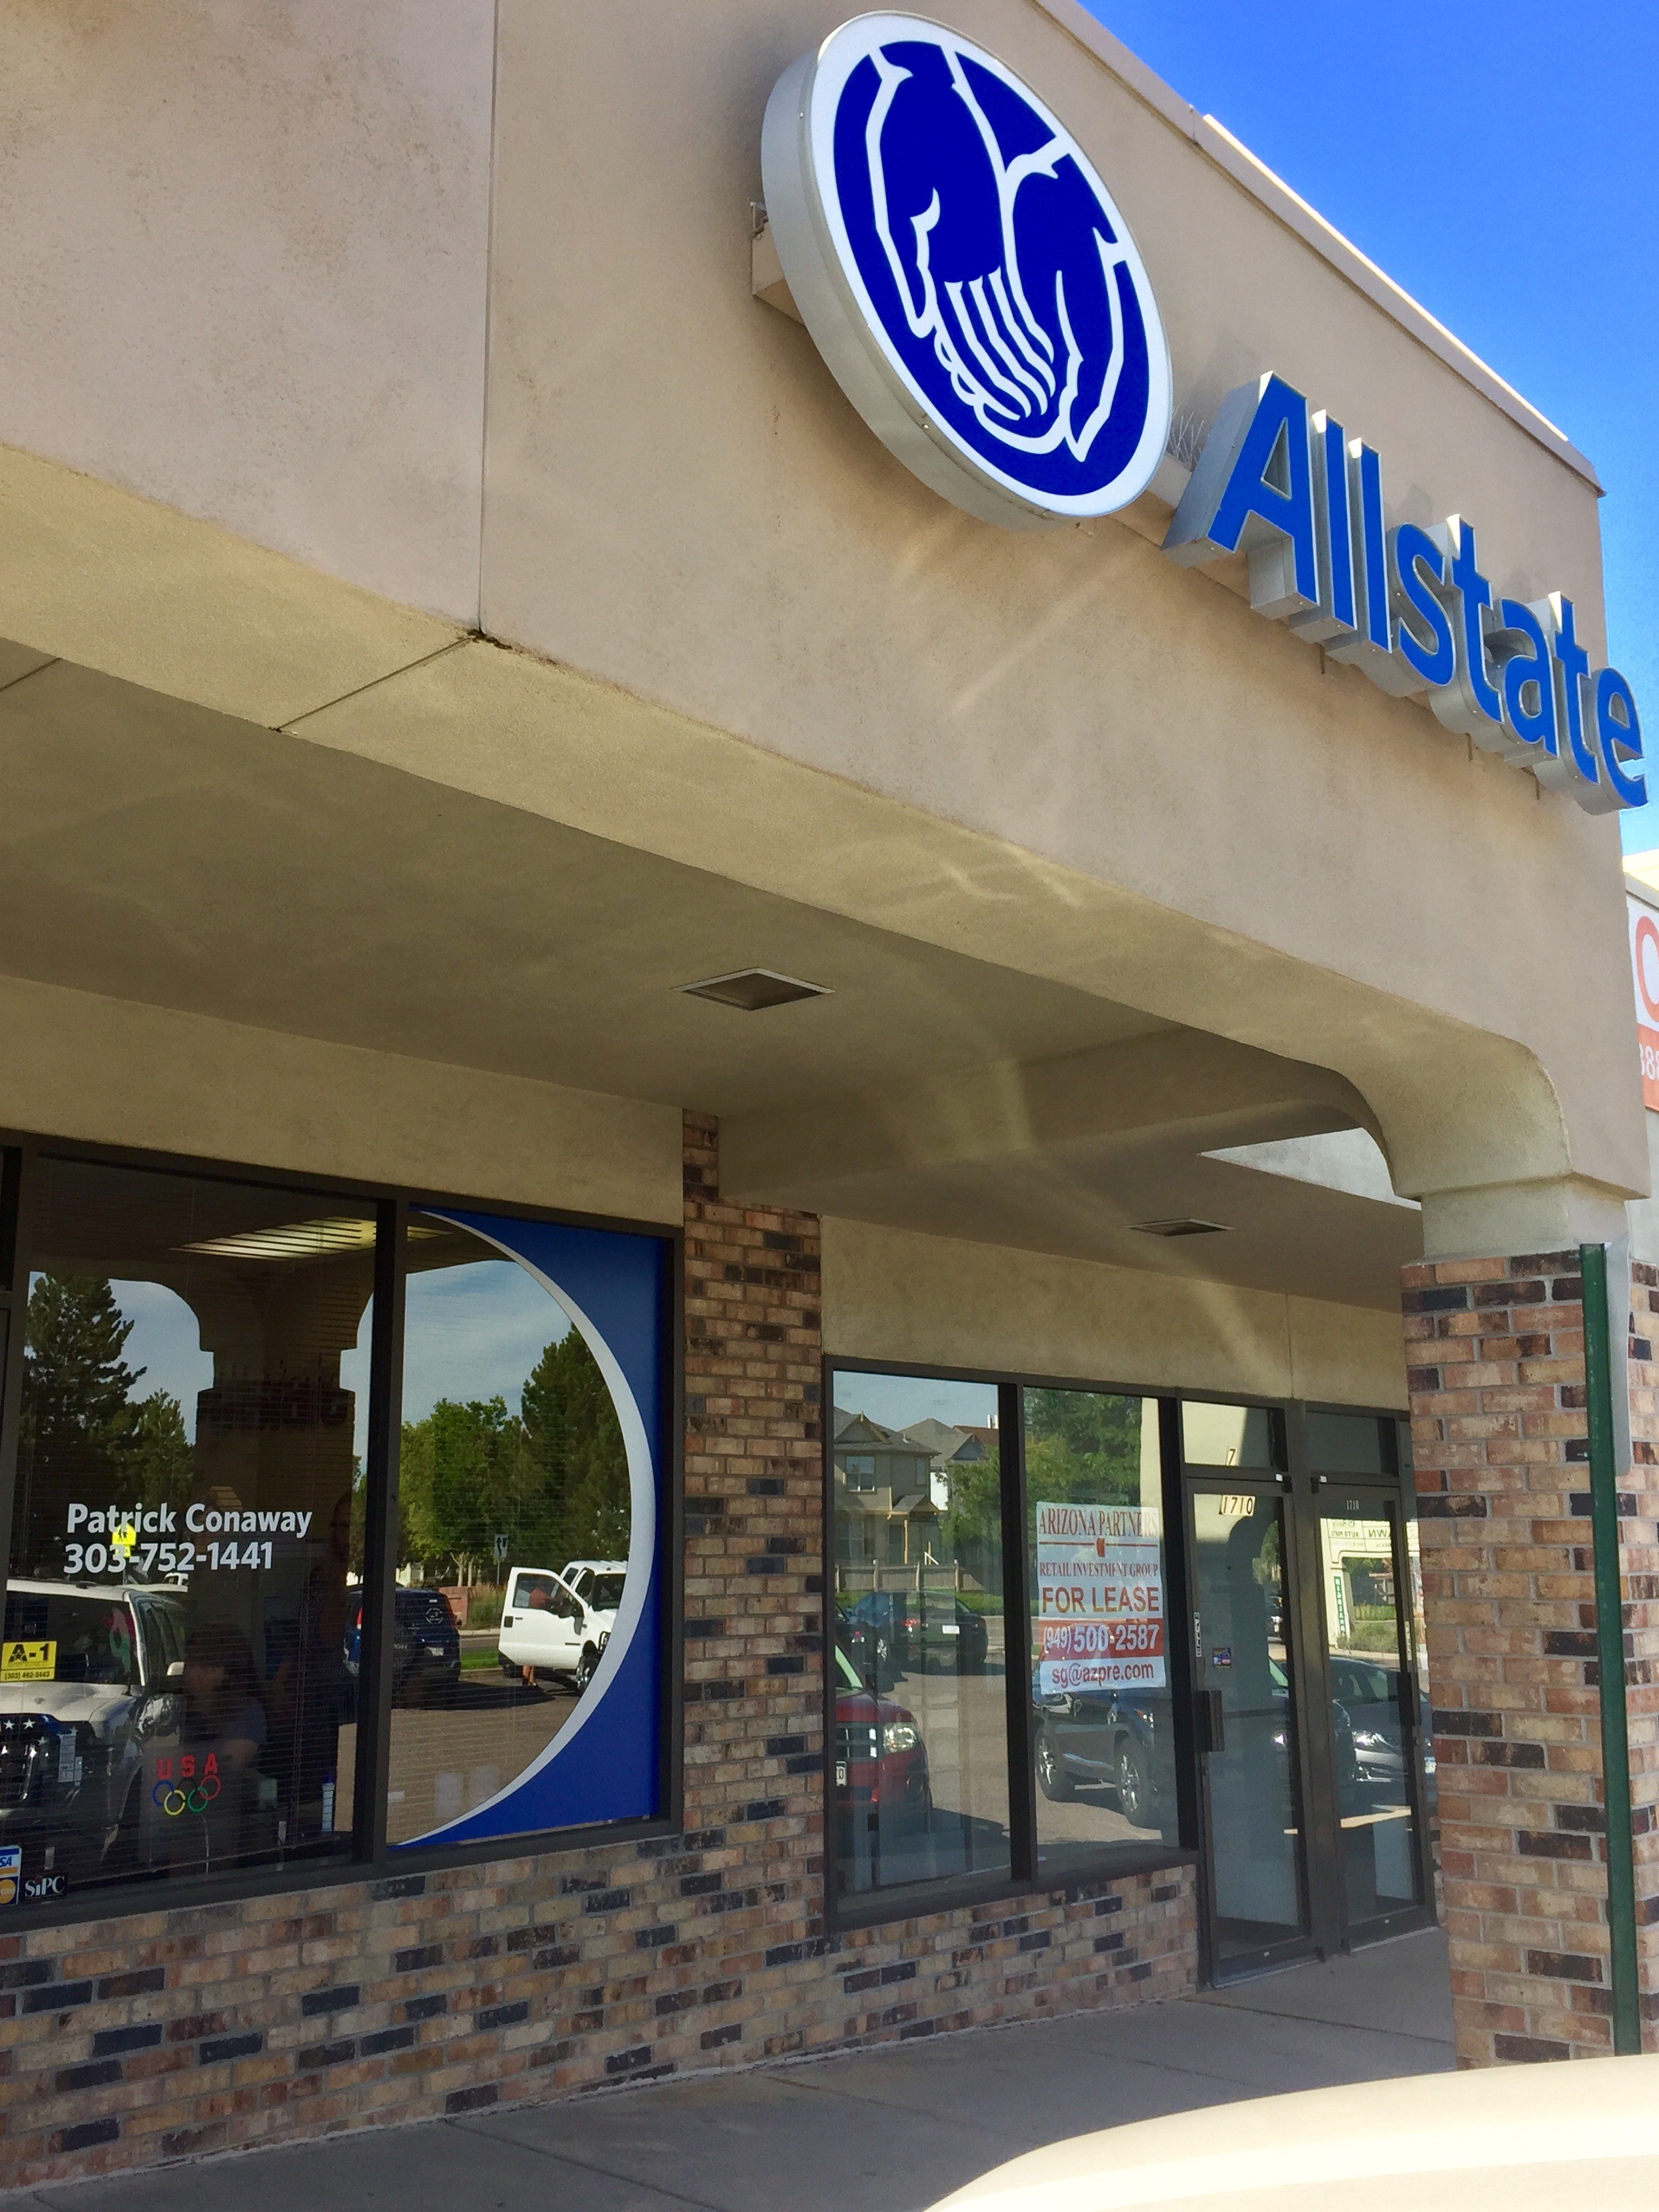 Patrick Conaway: Allstate Insurance Aurora (303)752-1441